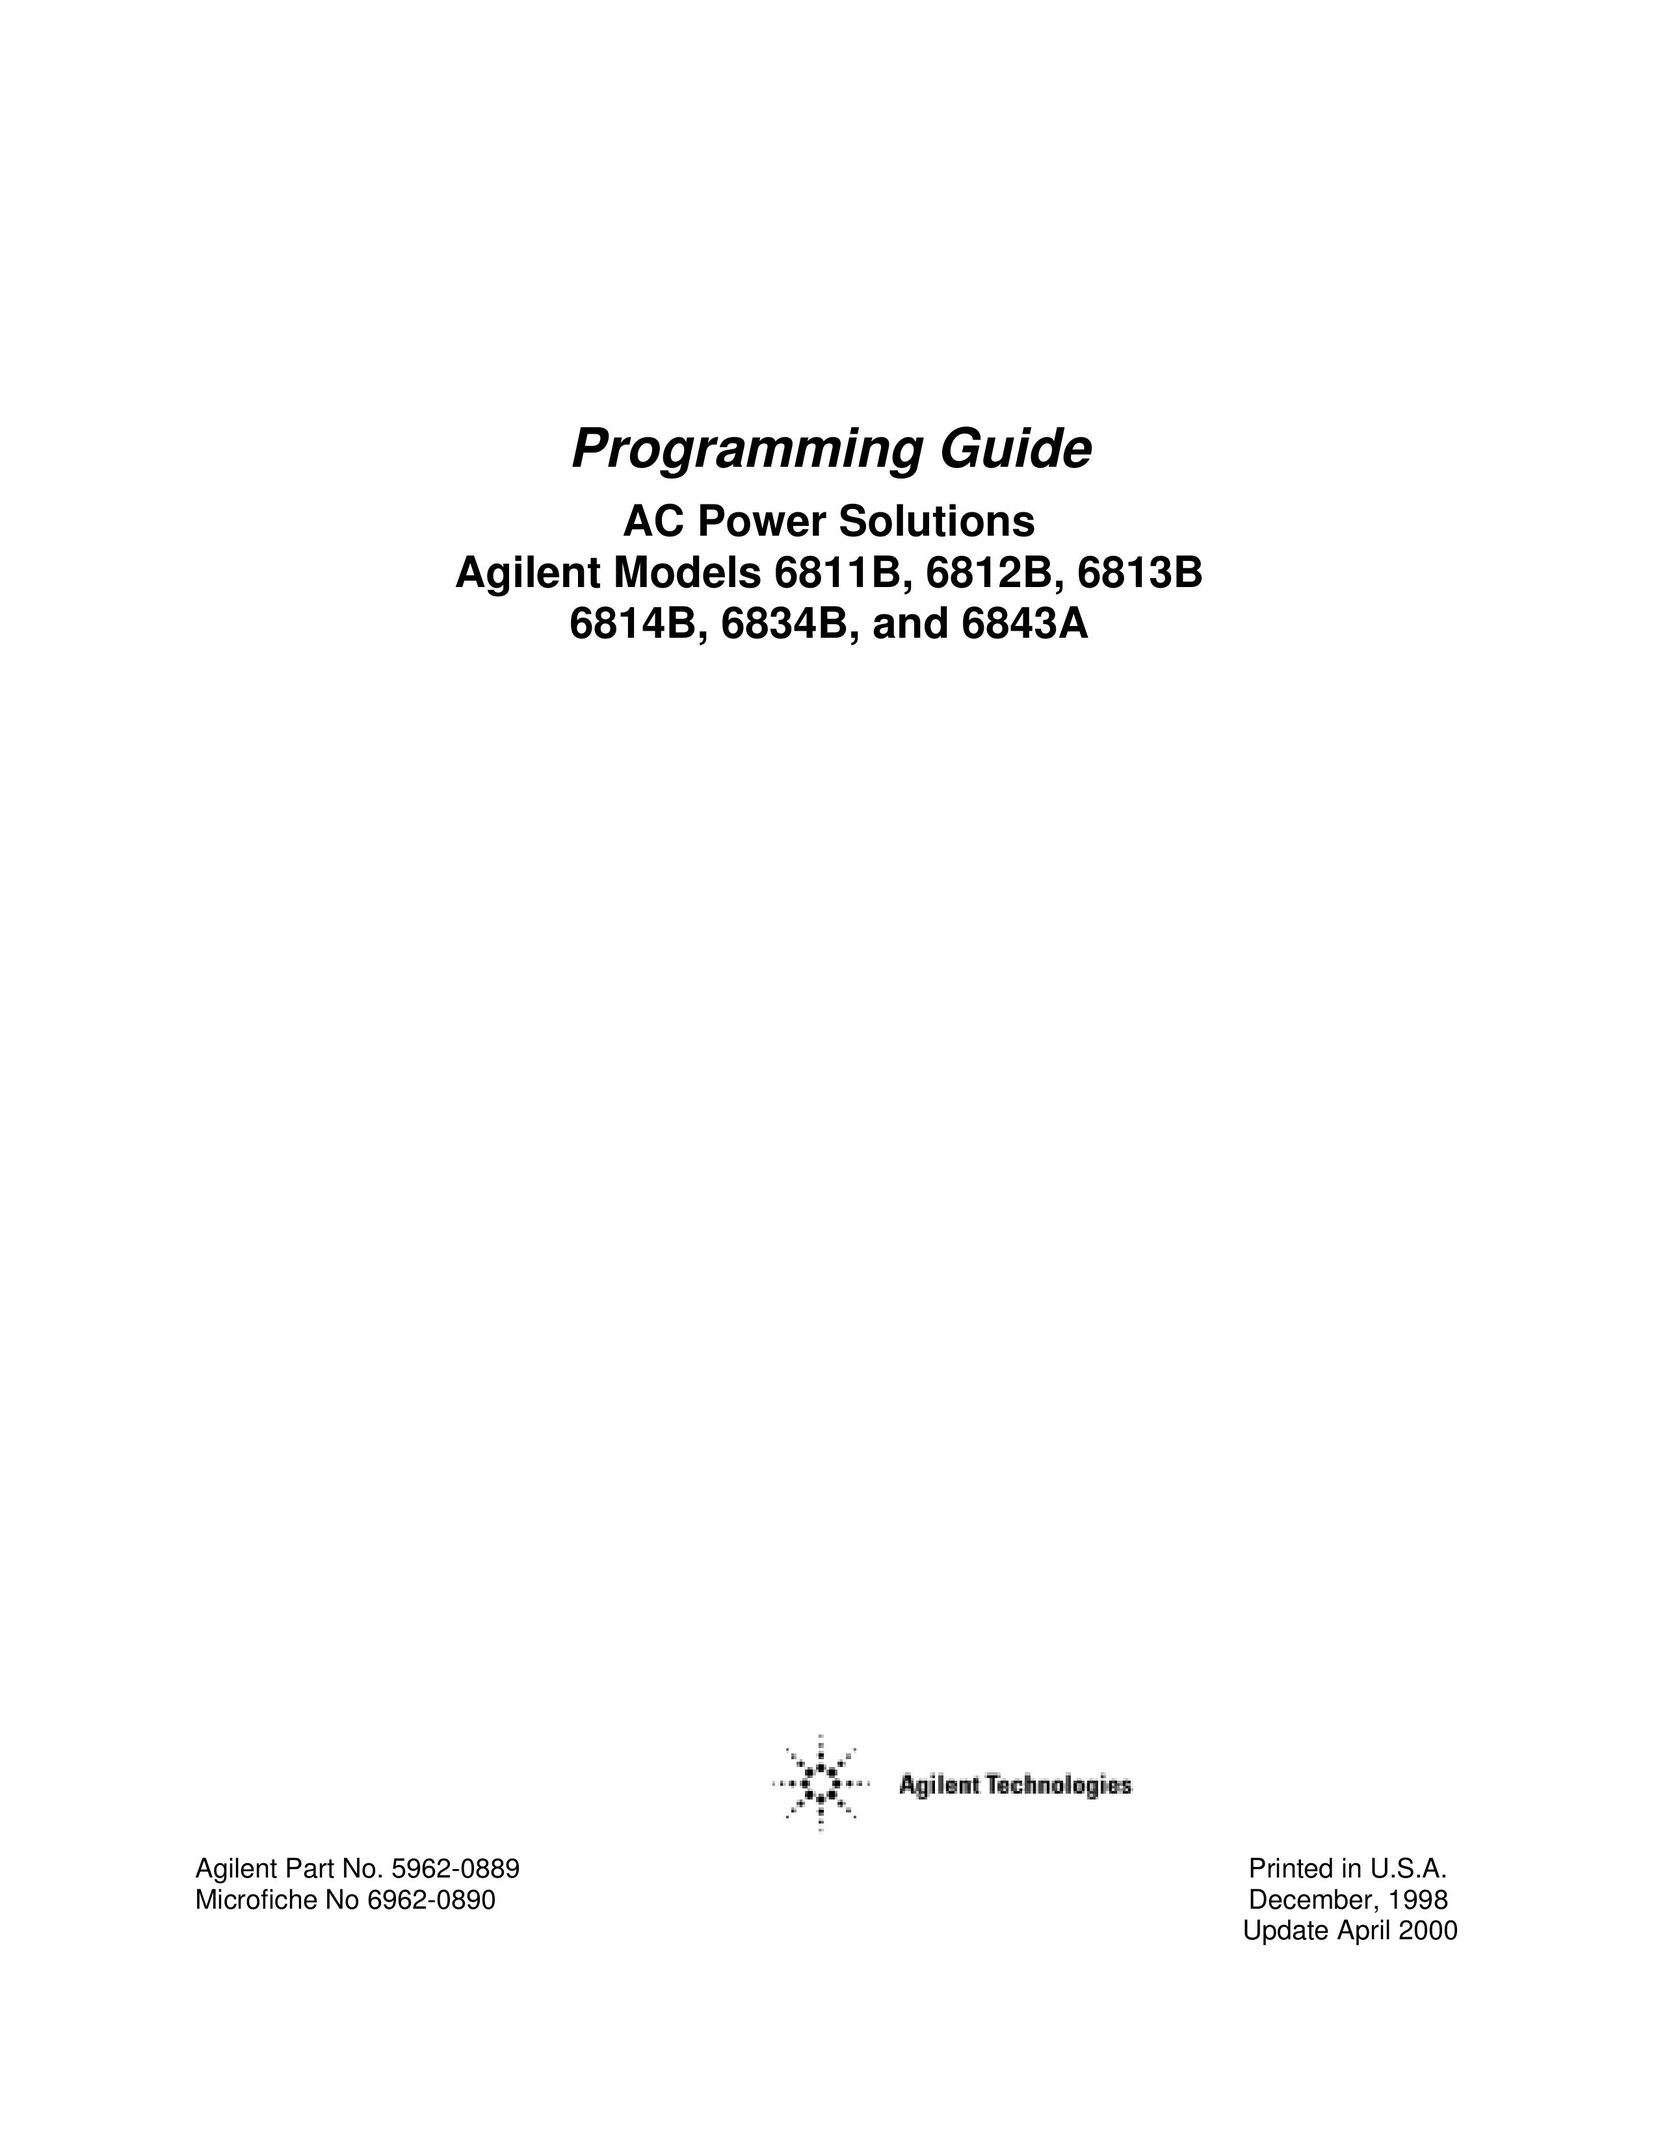 Agilent Technologies 6843A Welding System User Manual